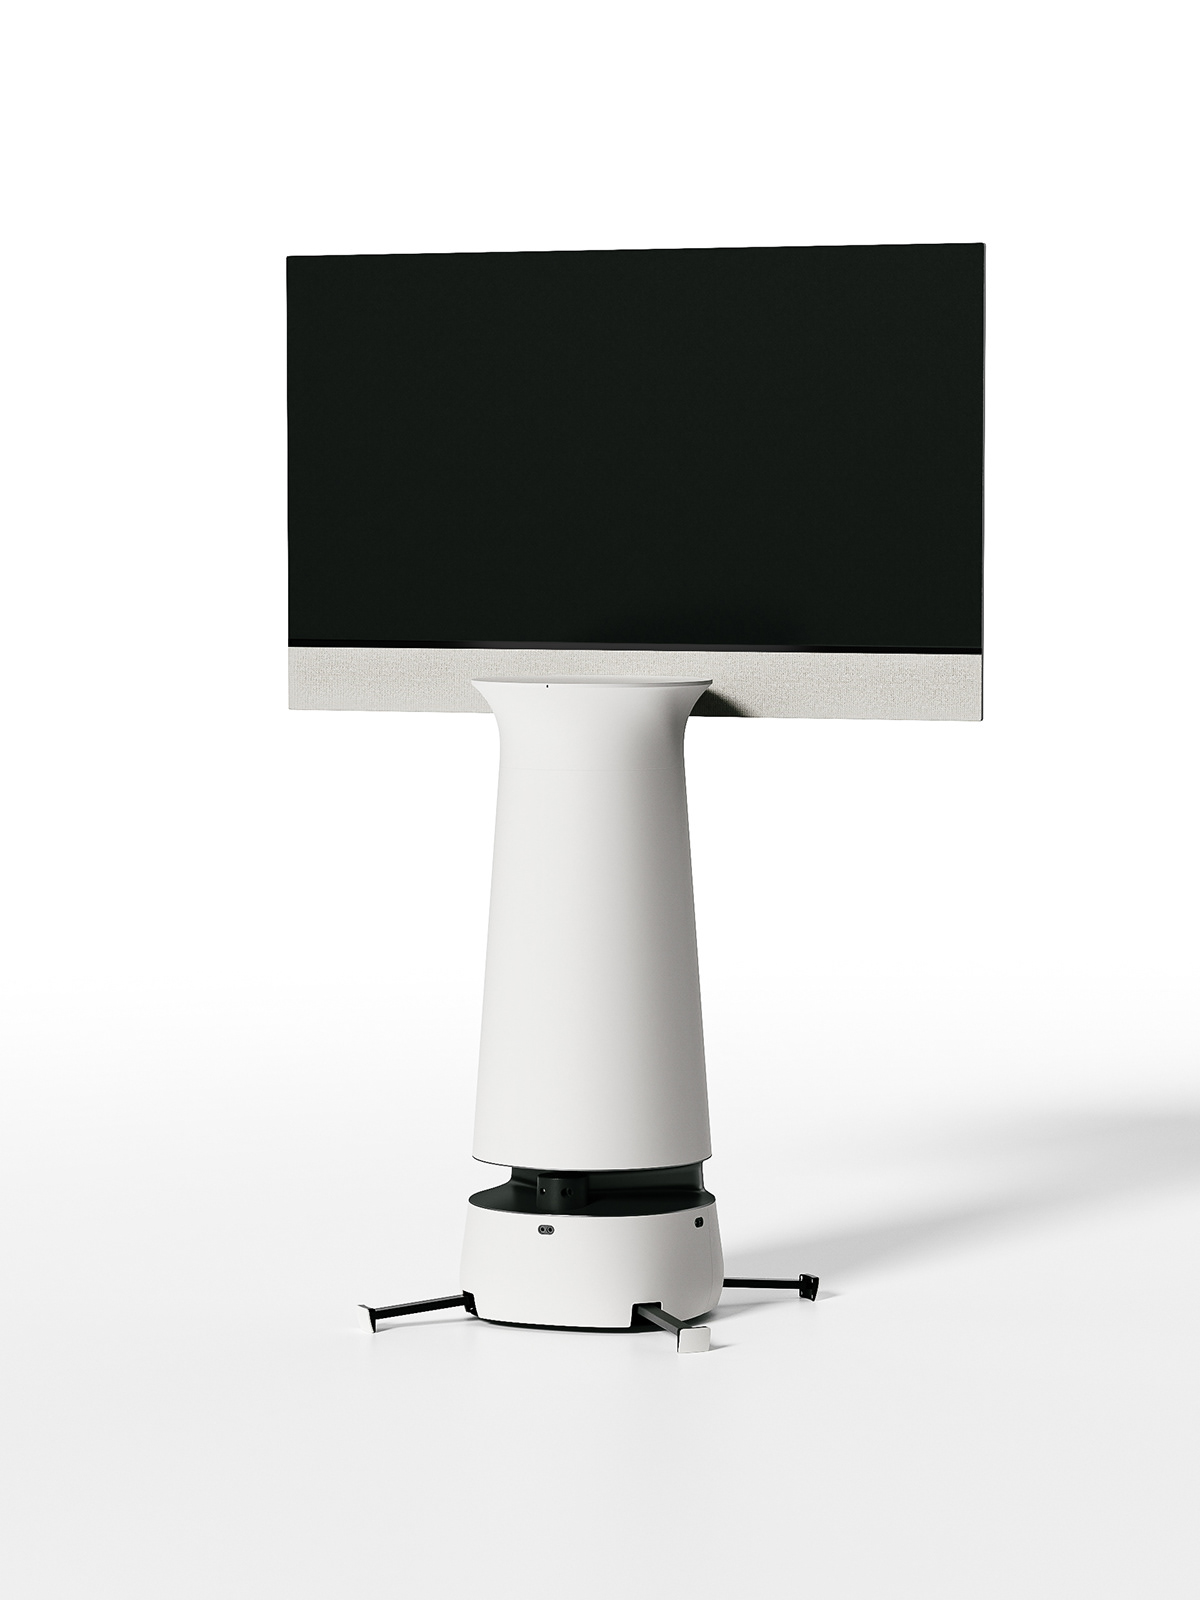 product design  product robot flexible design monitor tv